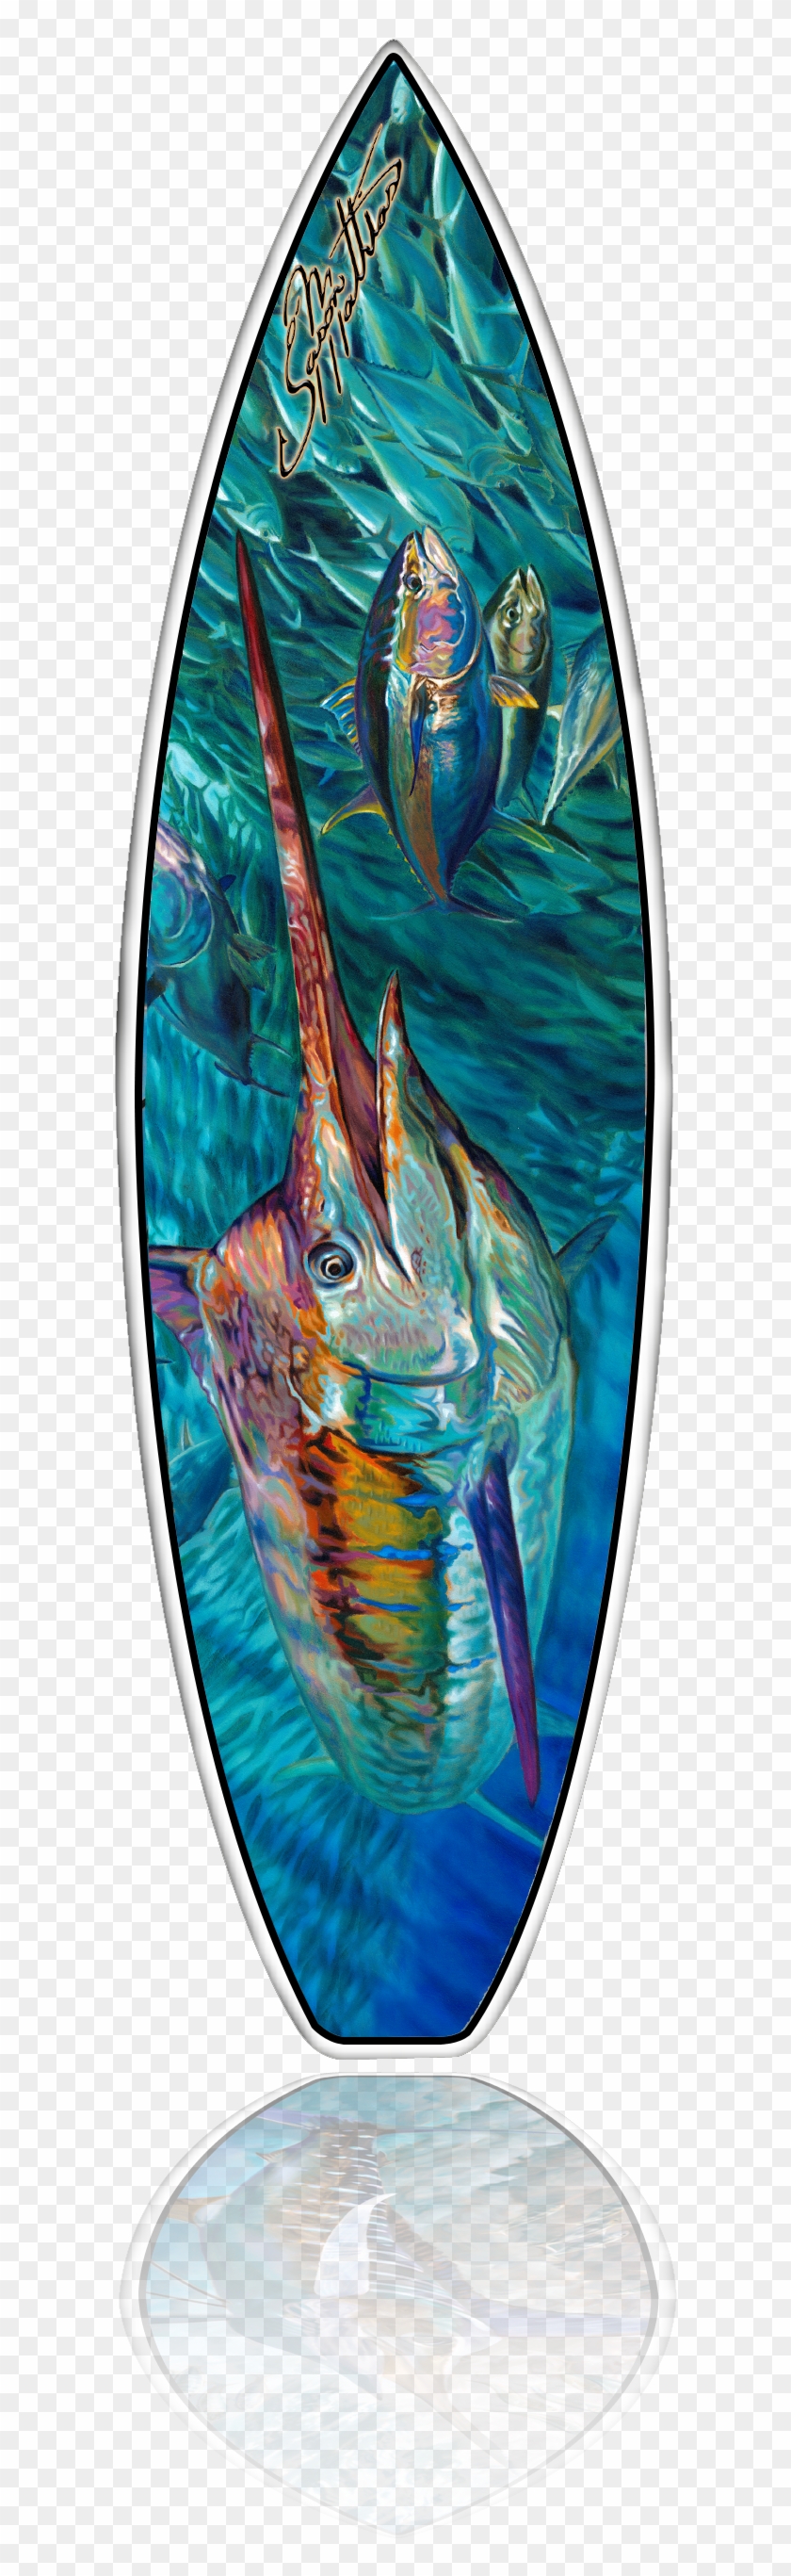 Surfboard Image - Surf Board #1703818